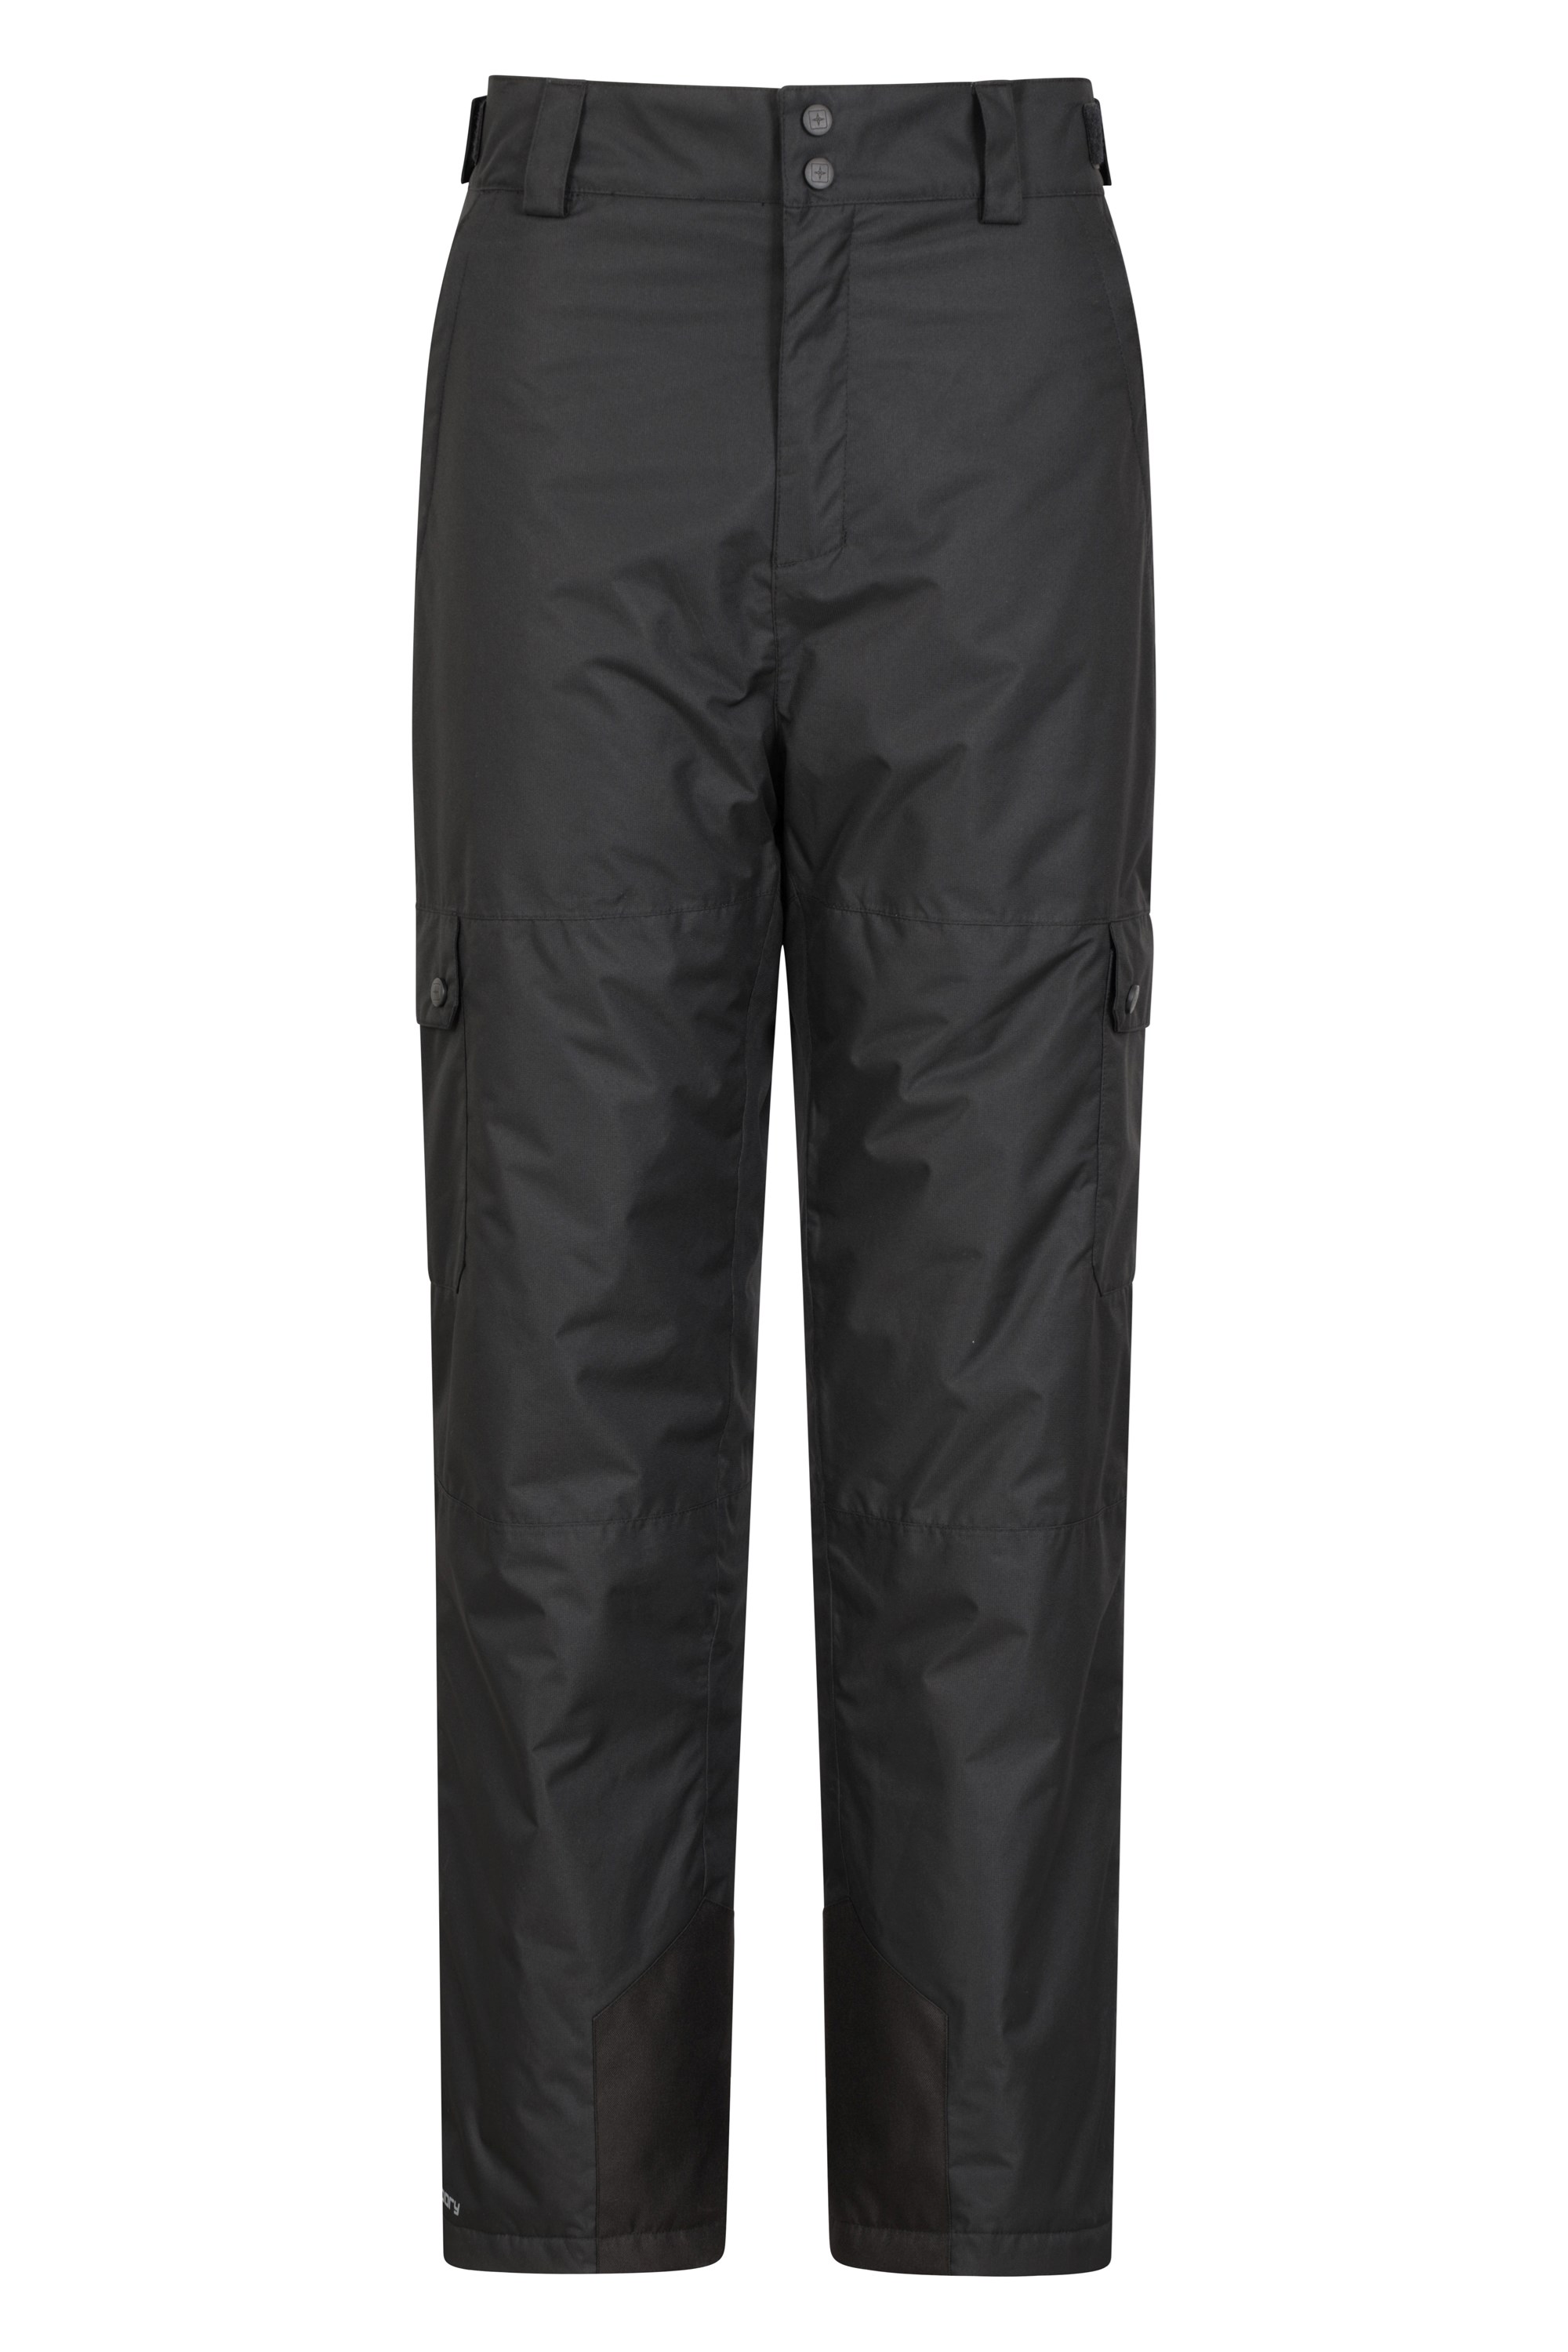 Titan Mens Snowboard Pants - Short Length